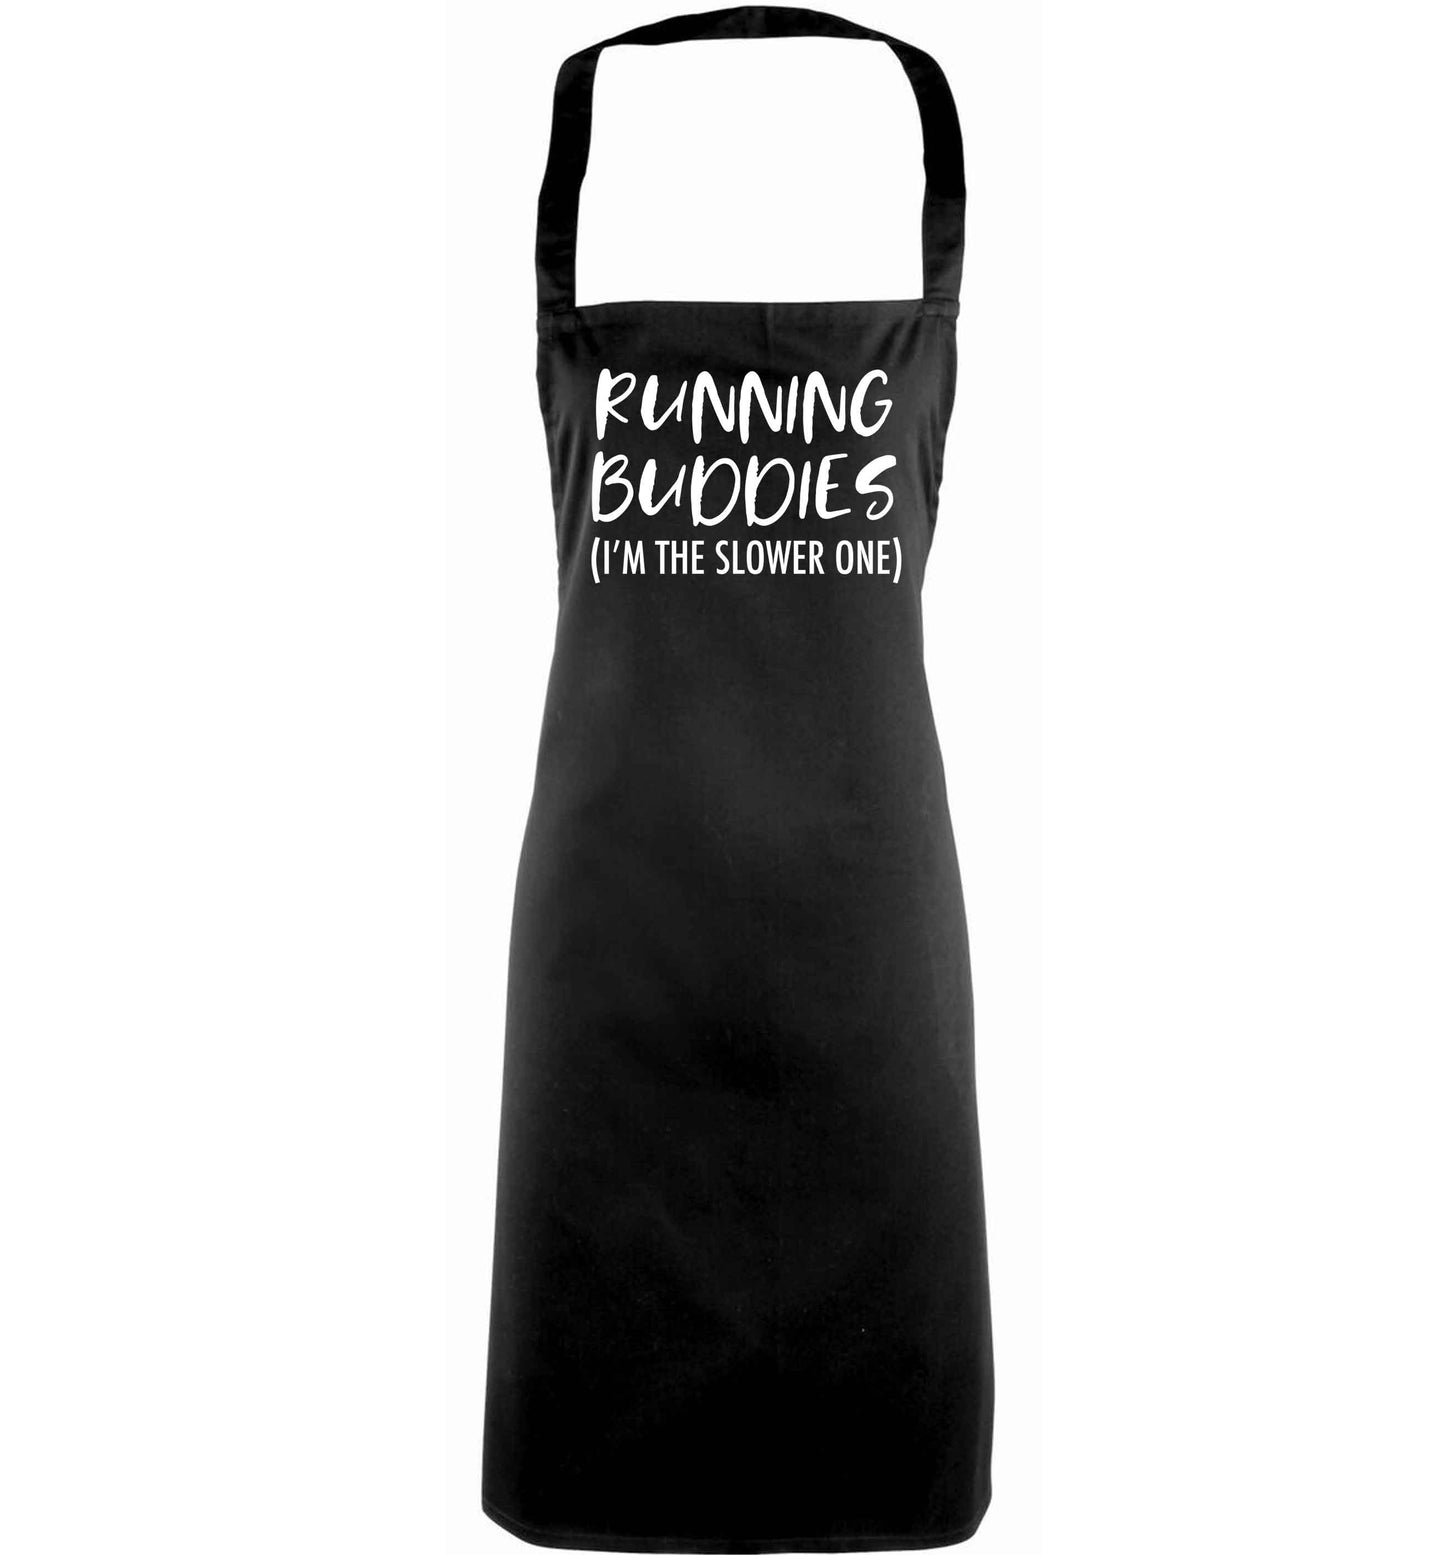 Running buddies (I'm the slower one) adults black apron